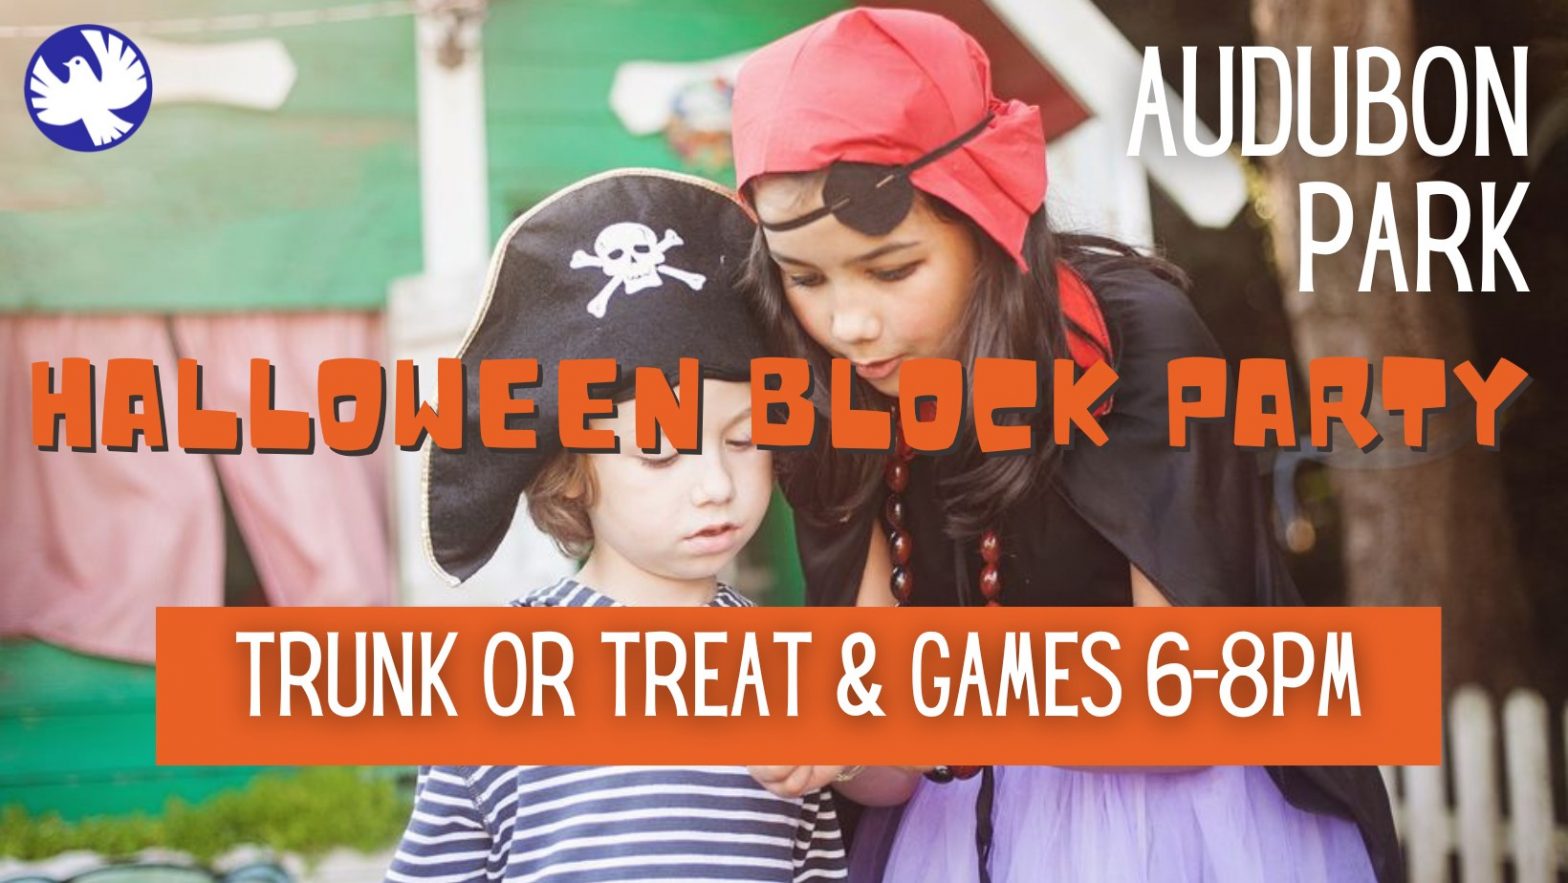 Audubon Park Neighborhood Halloween Block Party | Park Ave Magazine